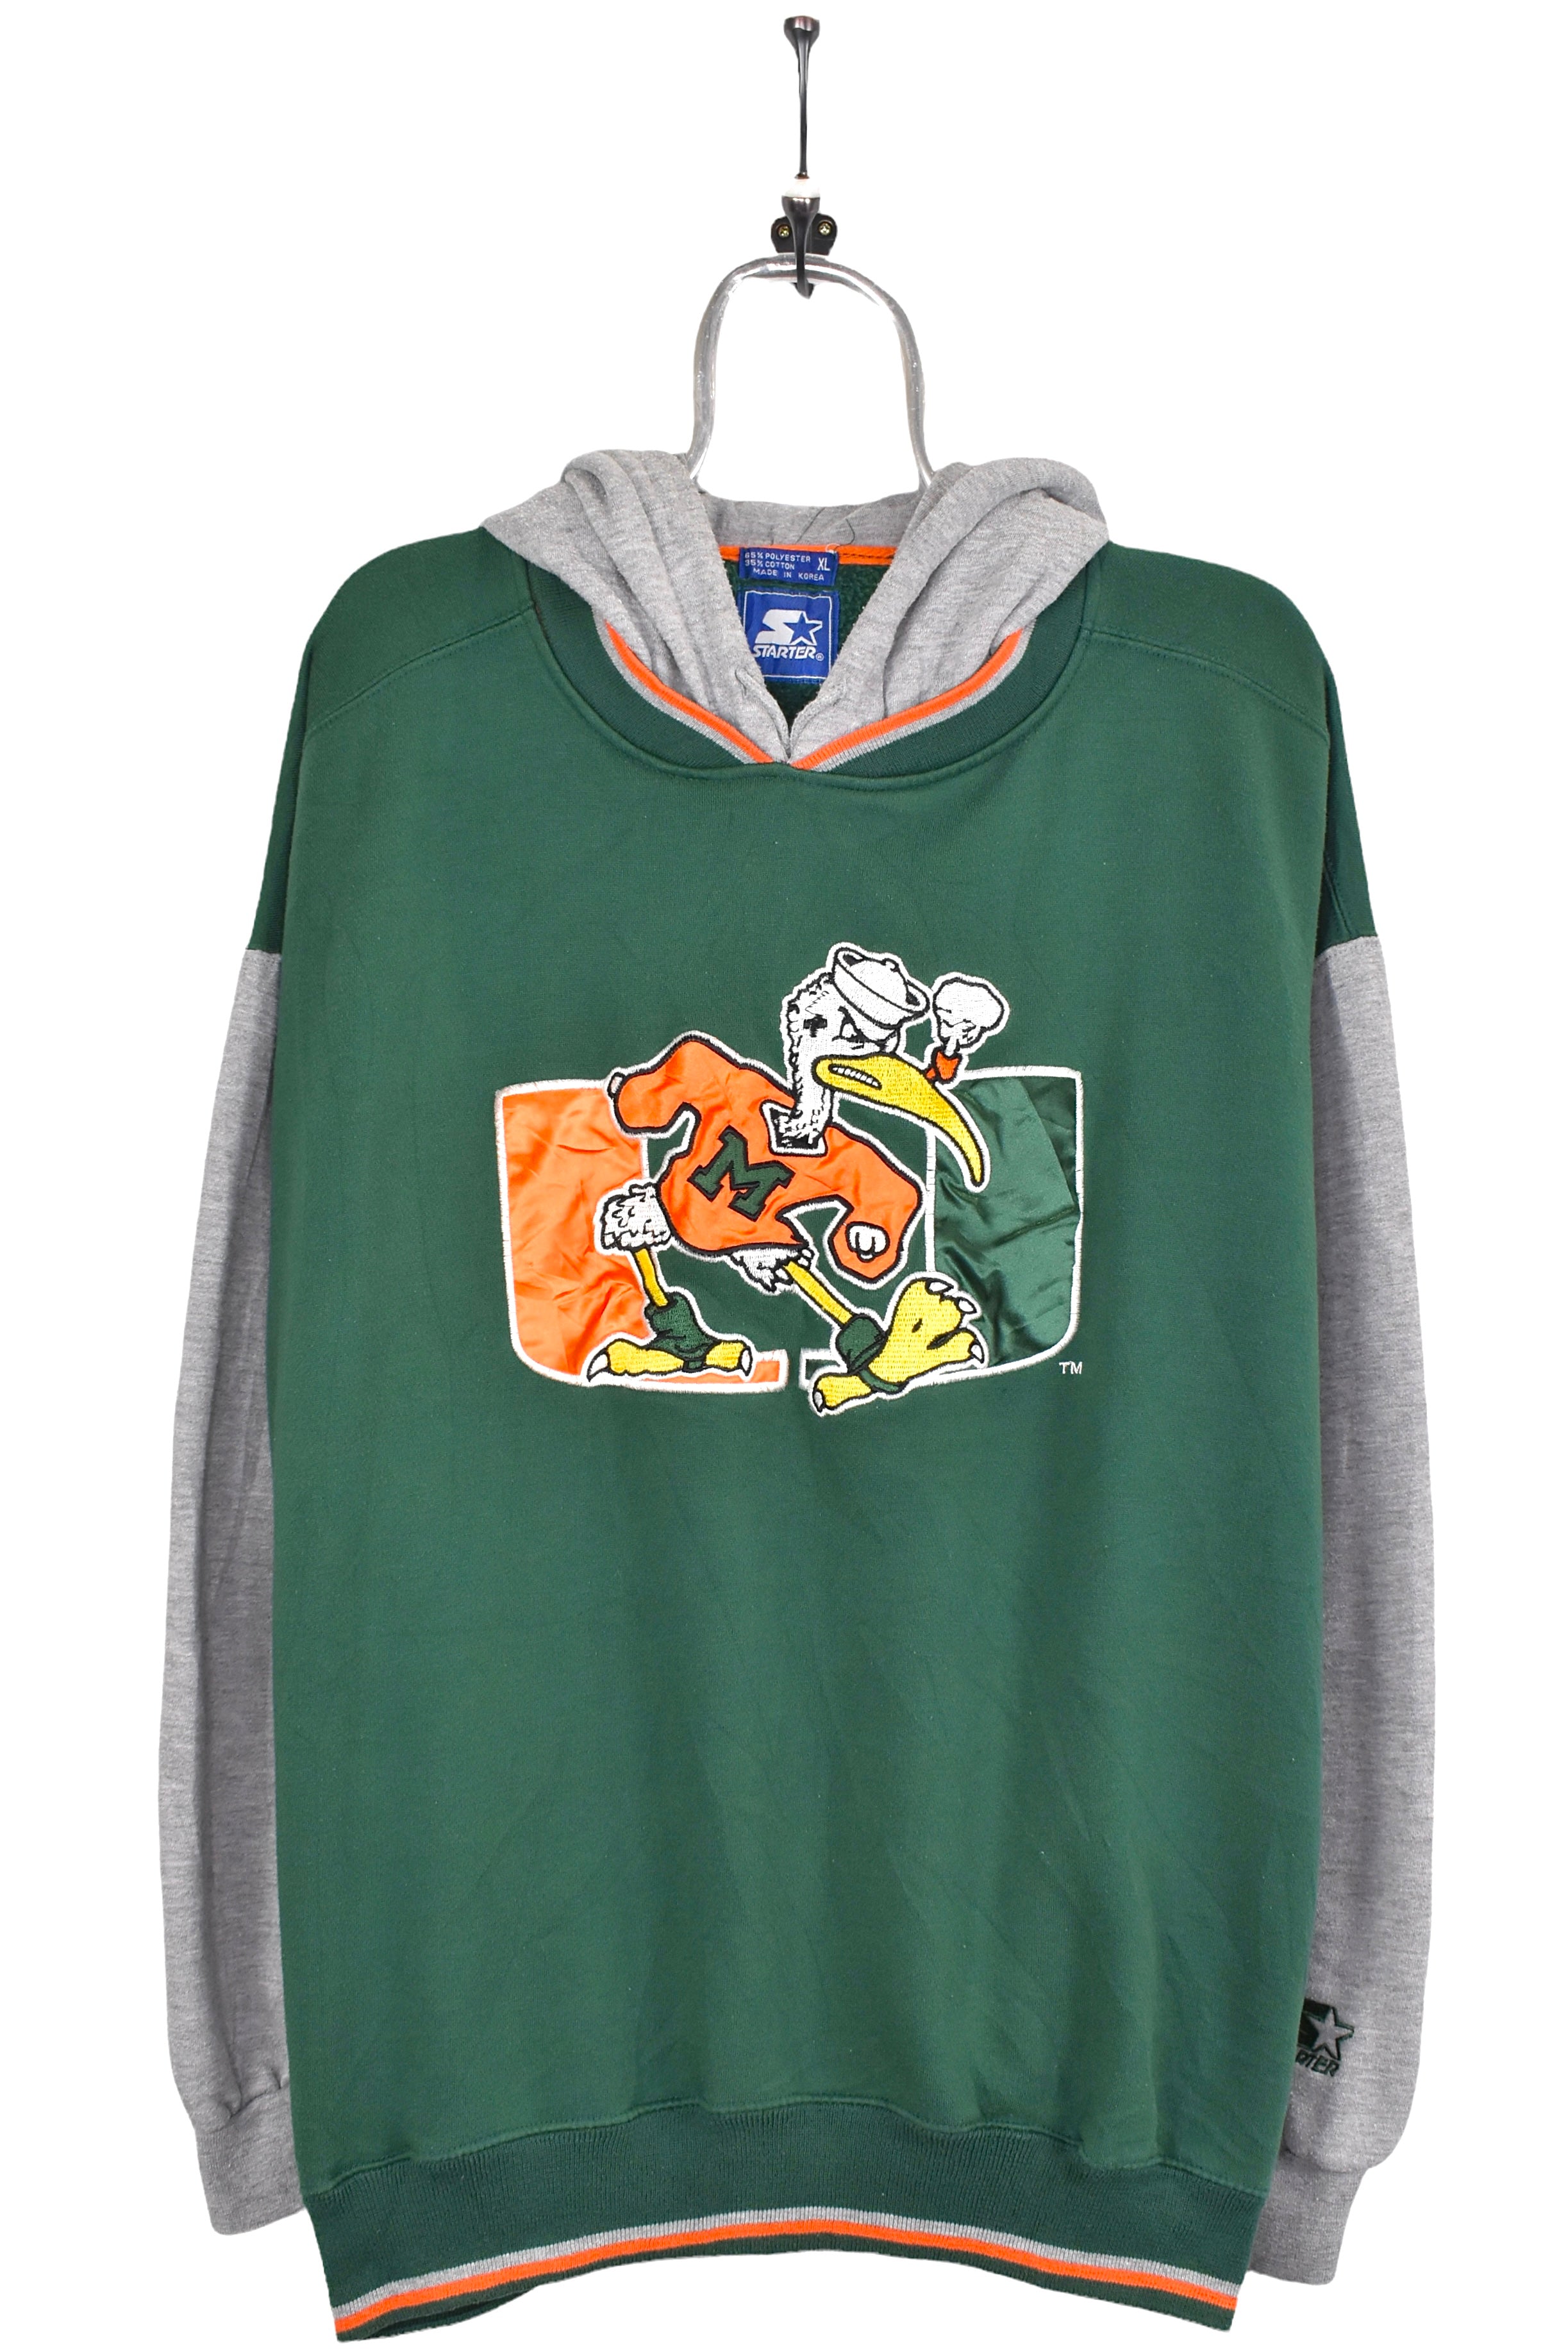 Vintage University of Miami hoodie, green Hurricanes embroidered sweatshirt - AU XL COLLEGE